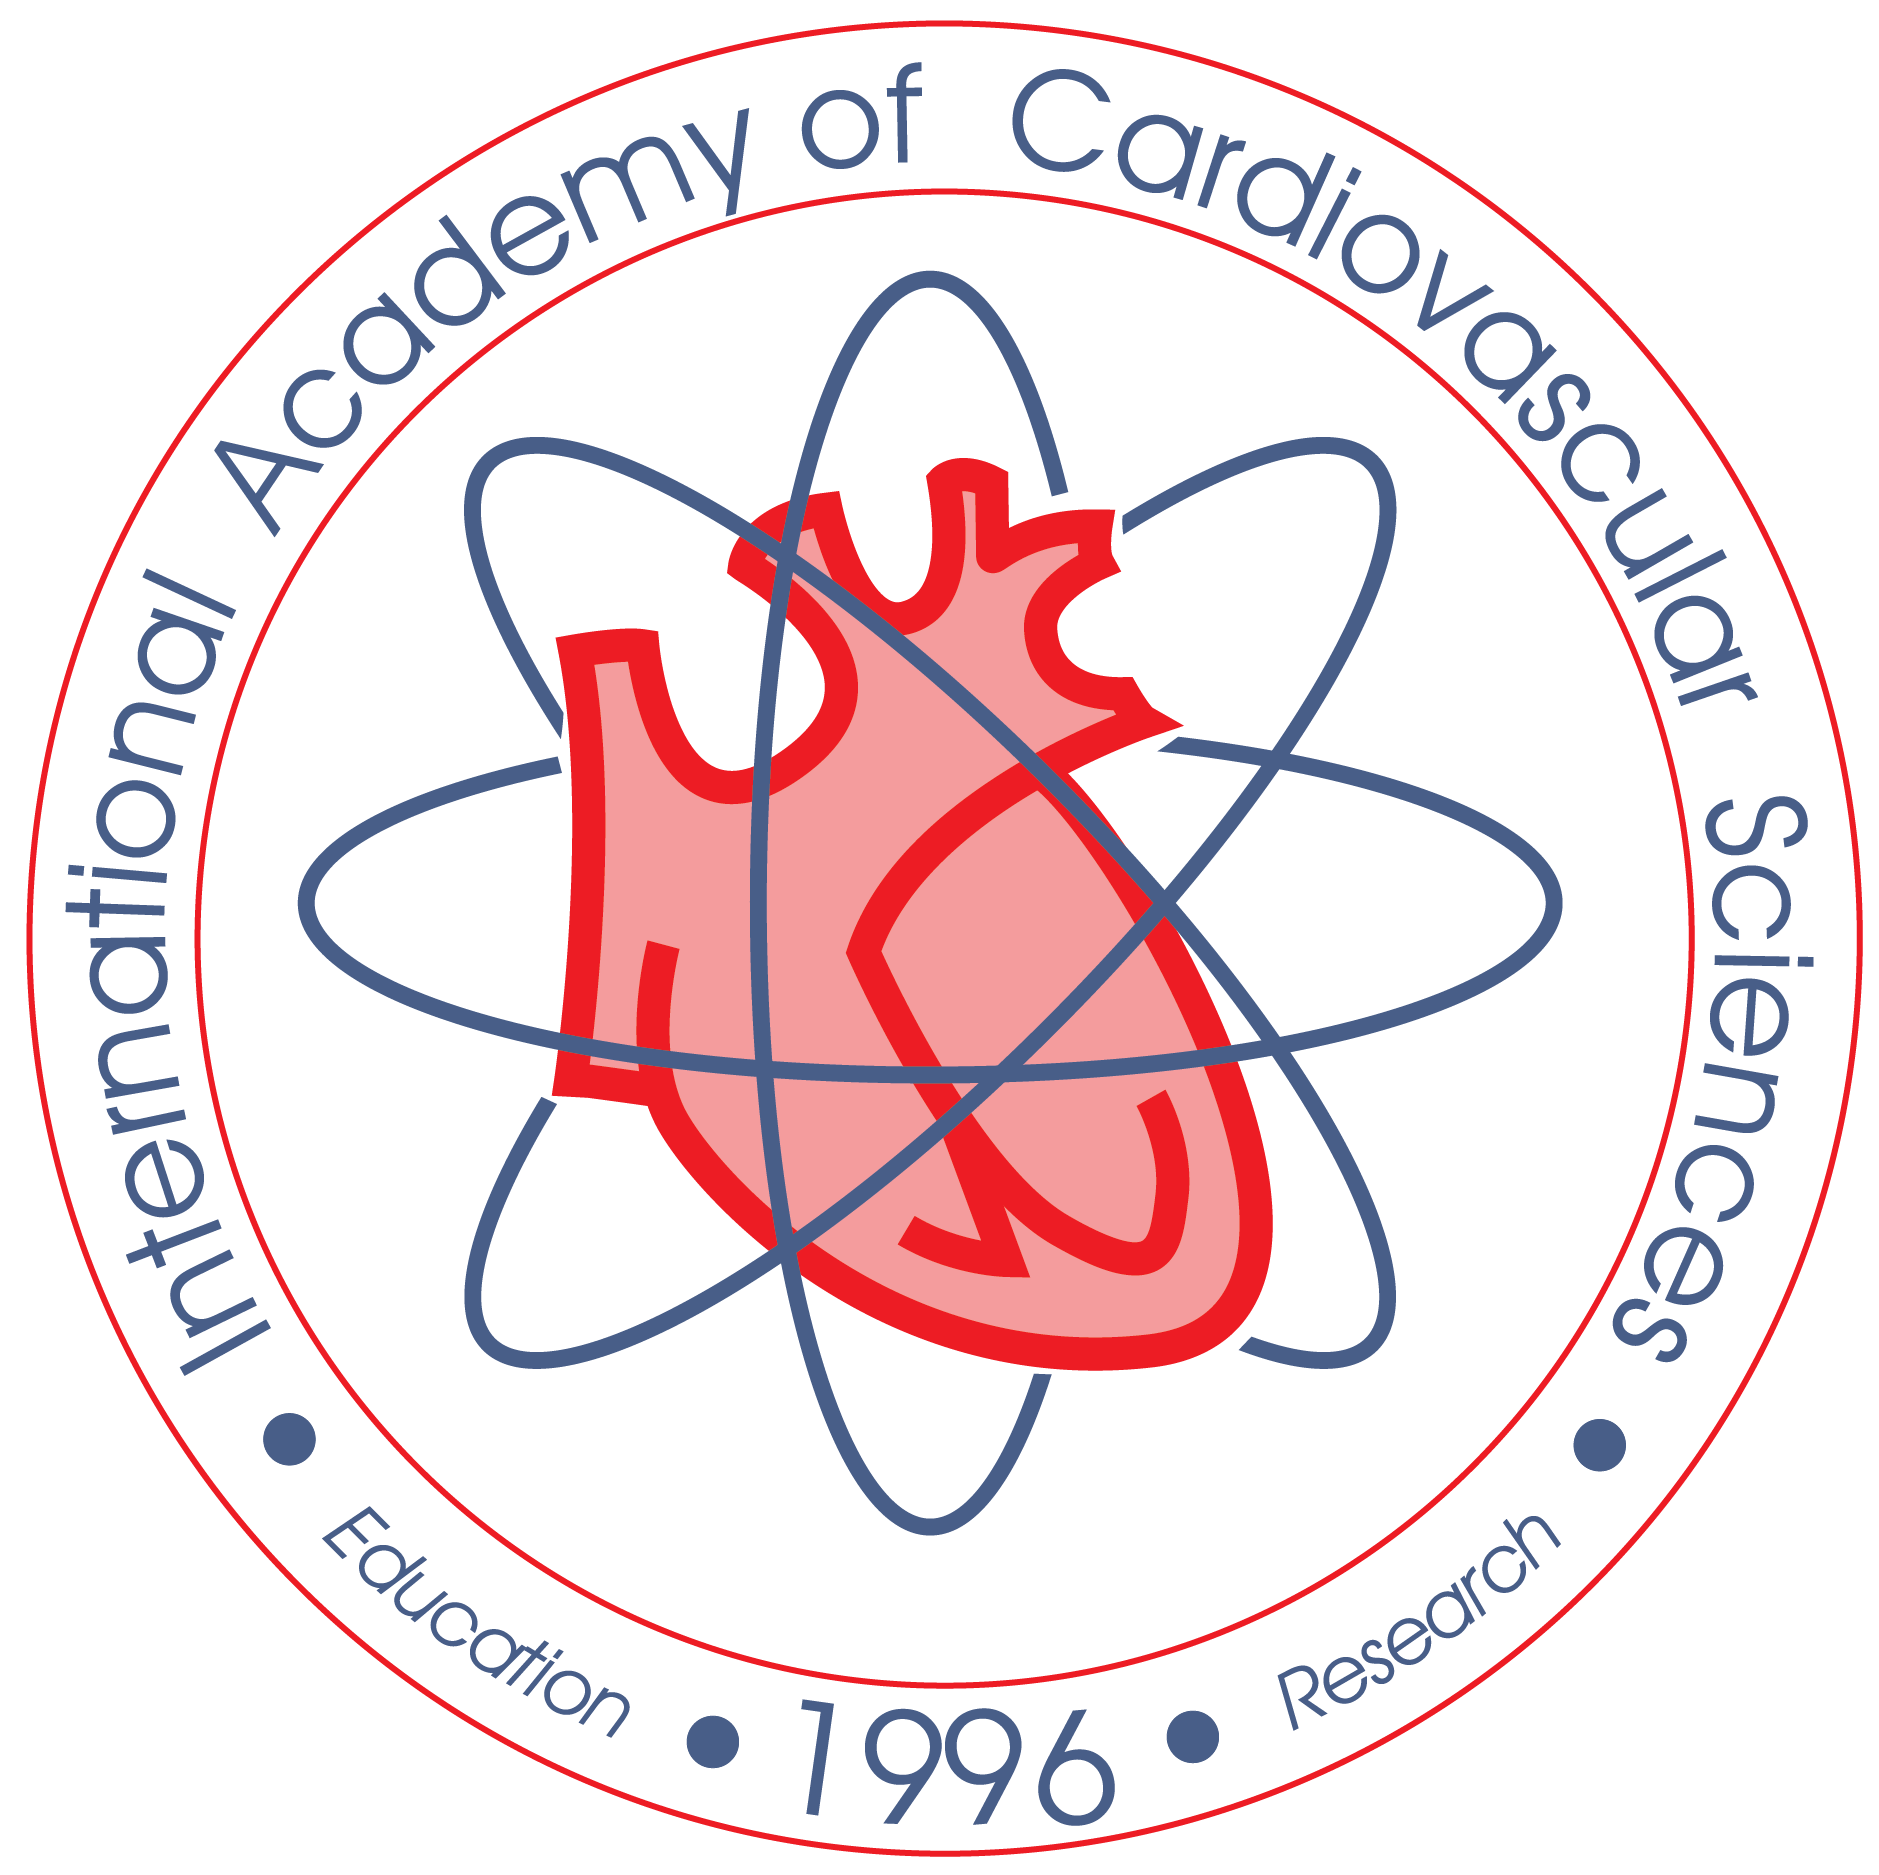 International Academy of Cardiovascular Sciences